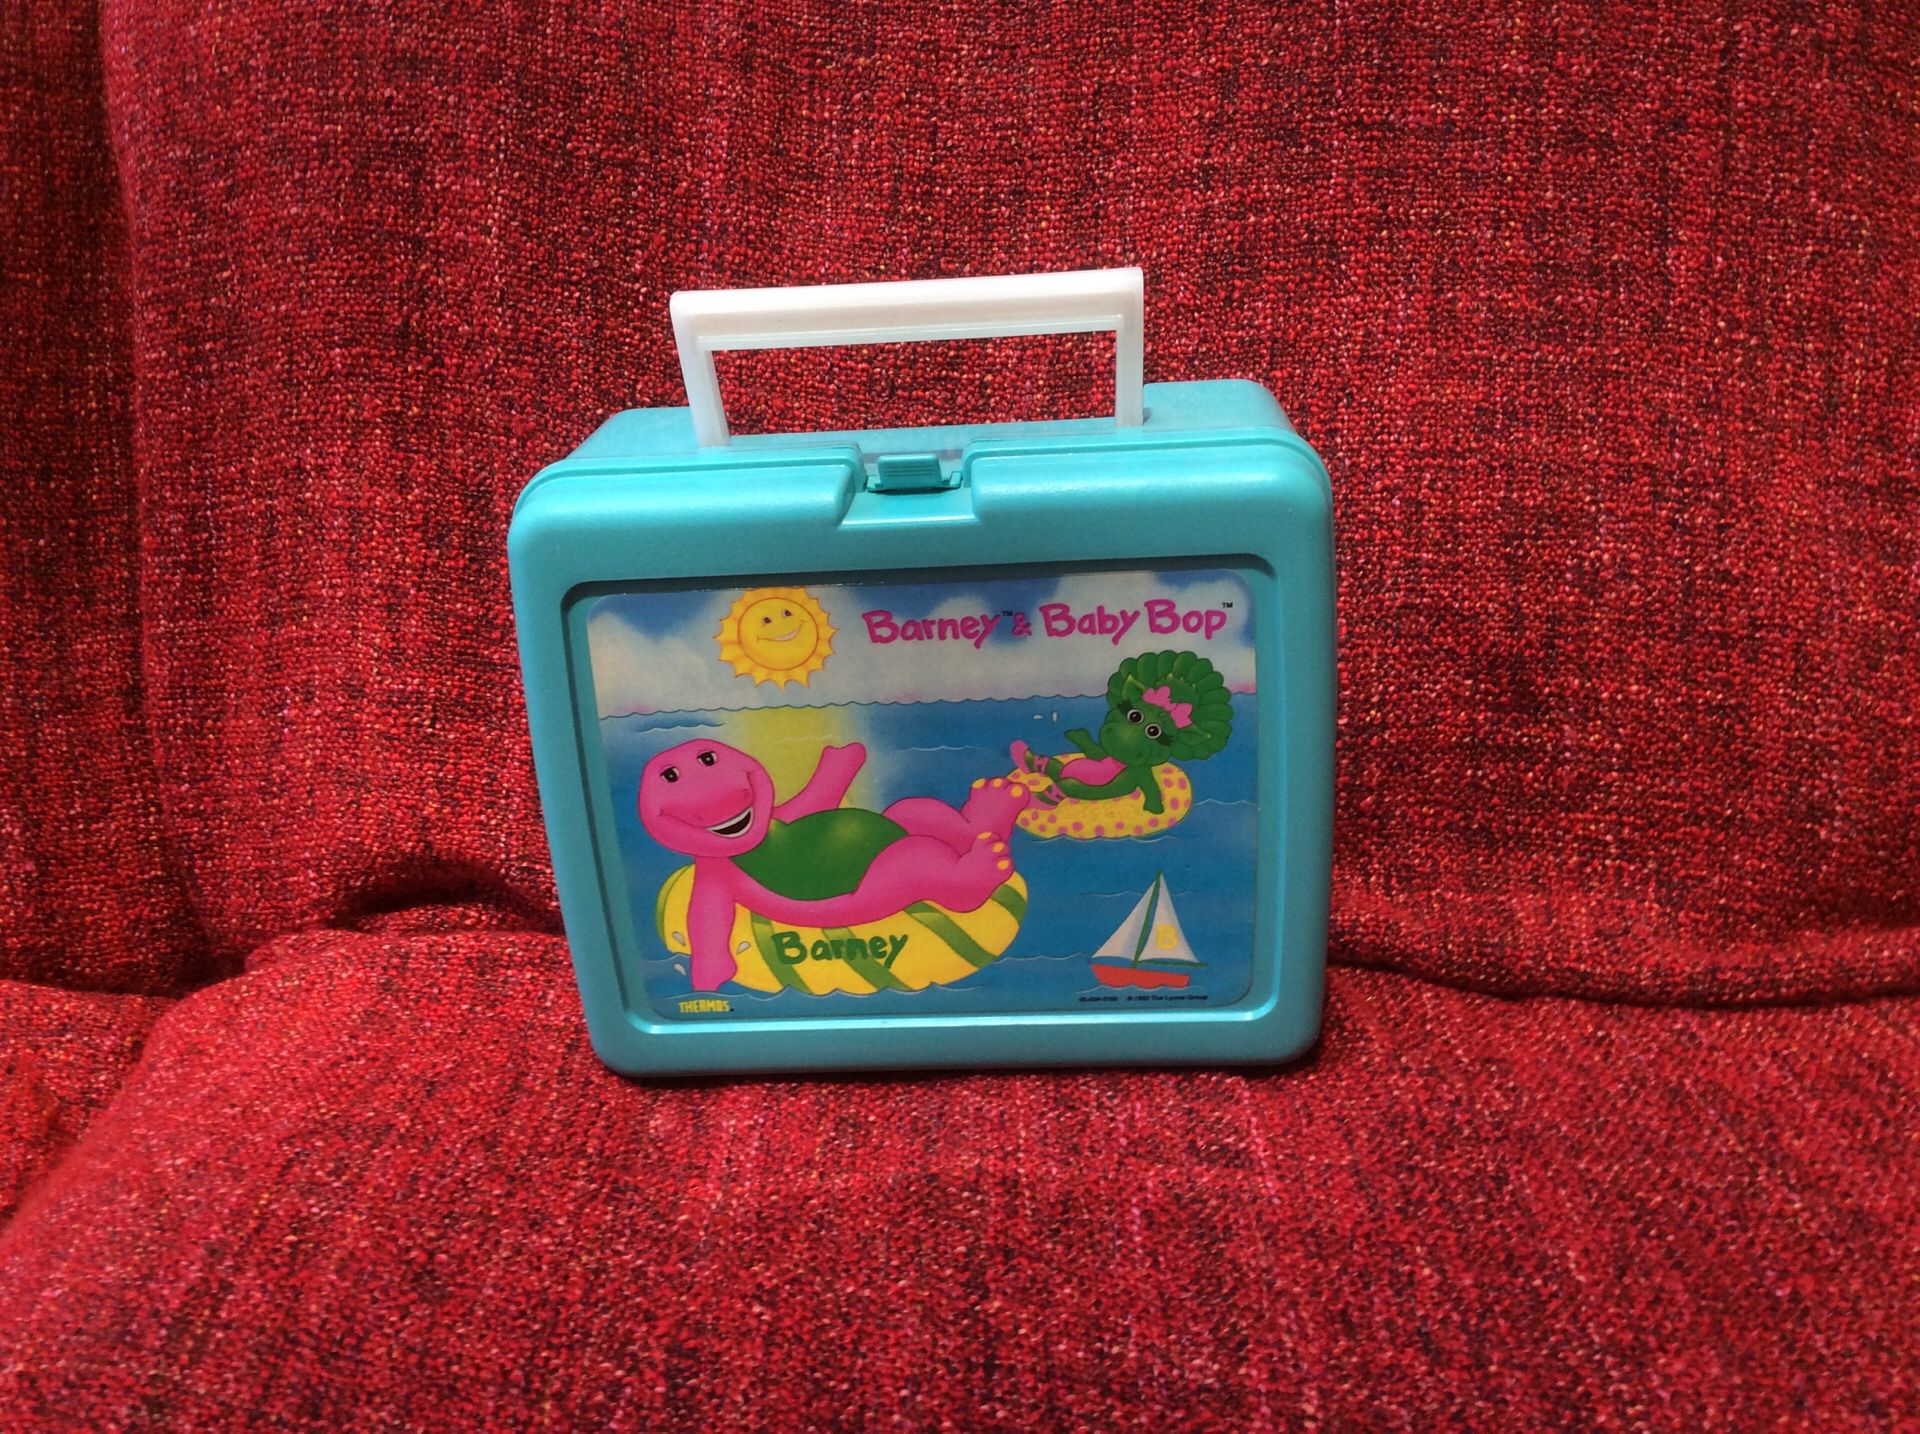 Barney & Baby Bop lunchbox - 1993